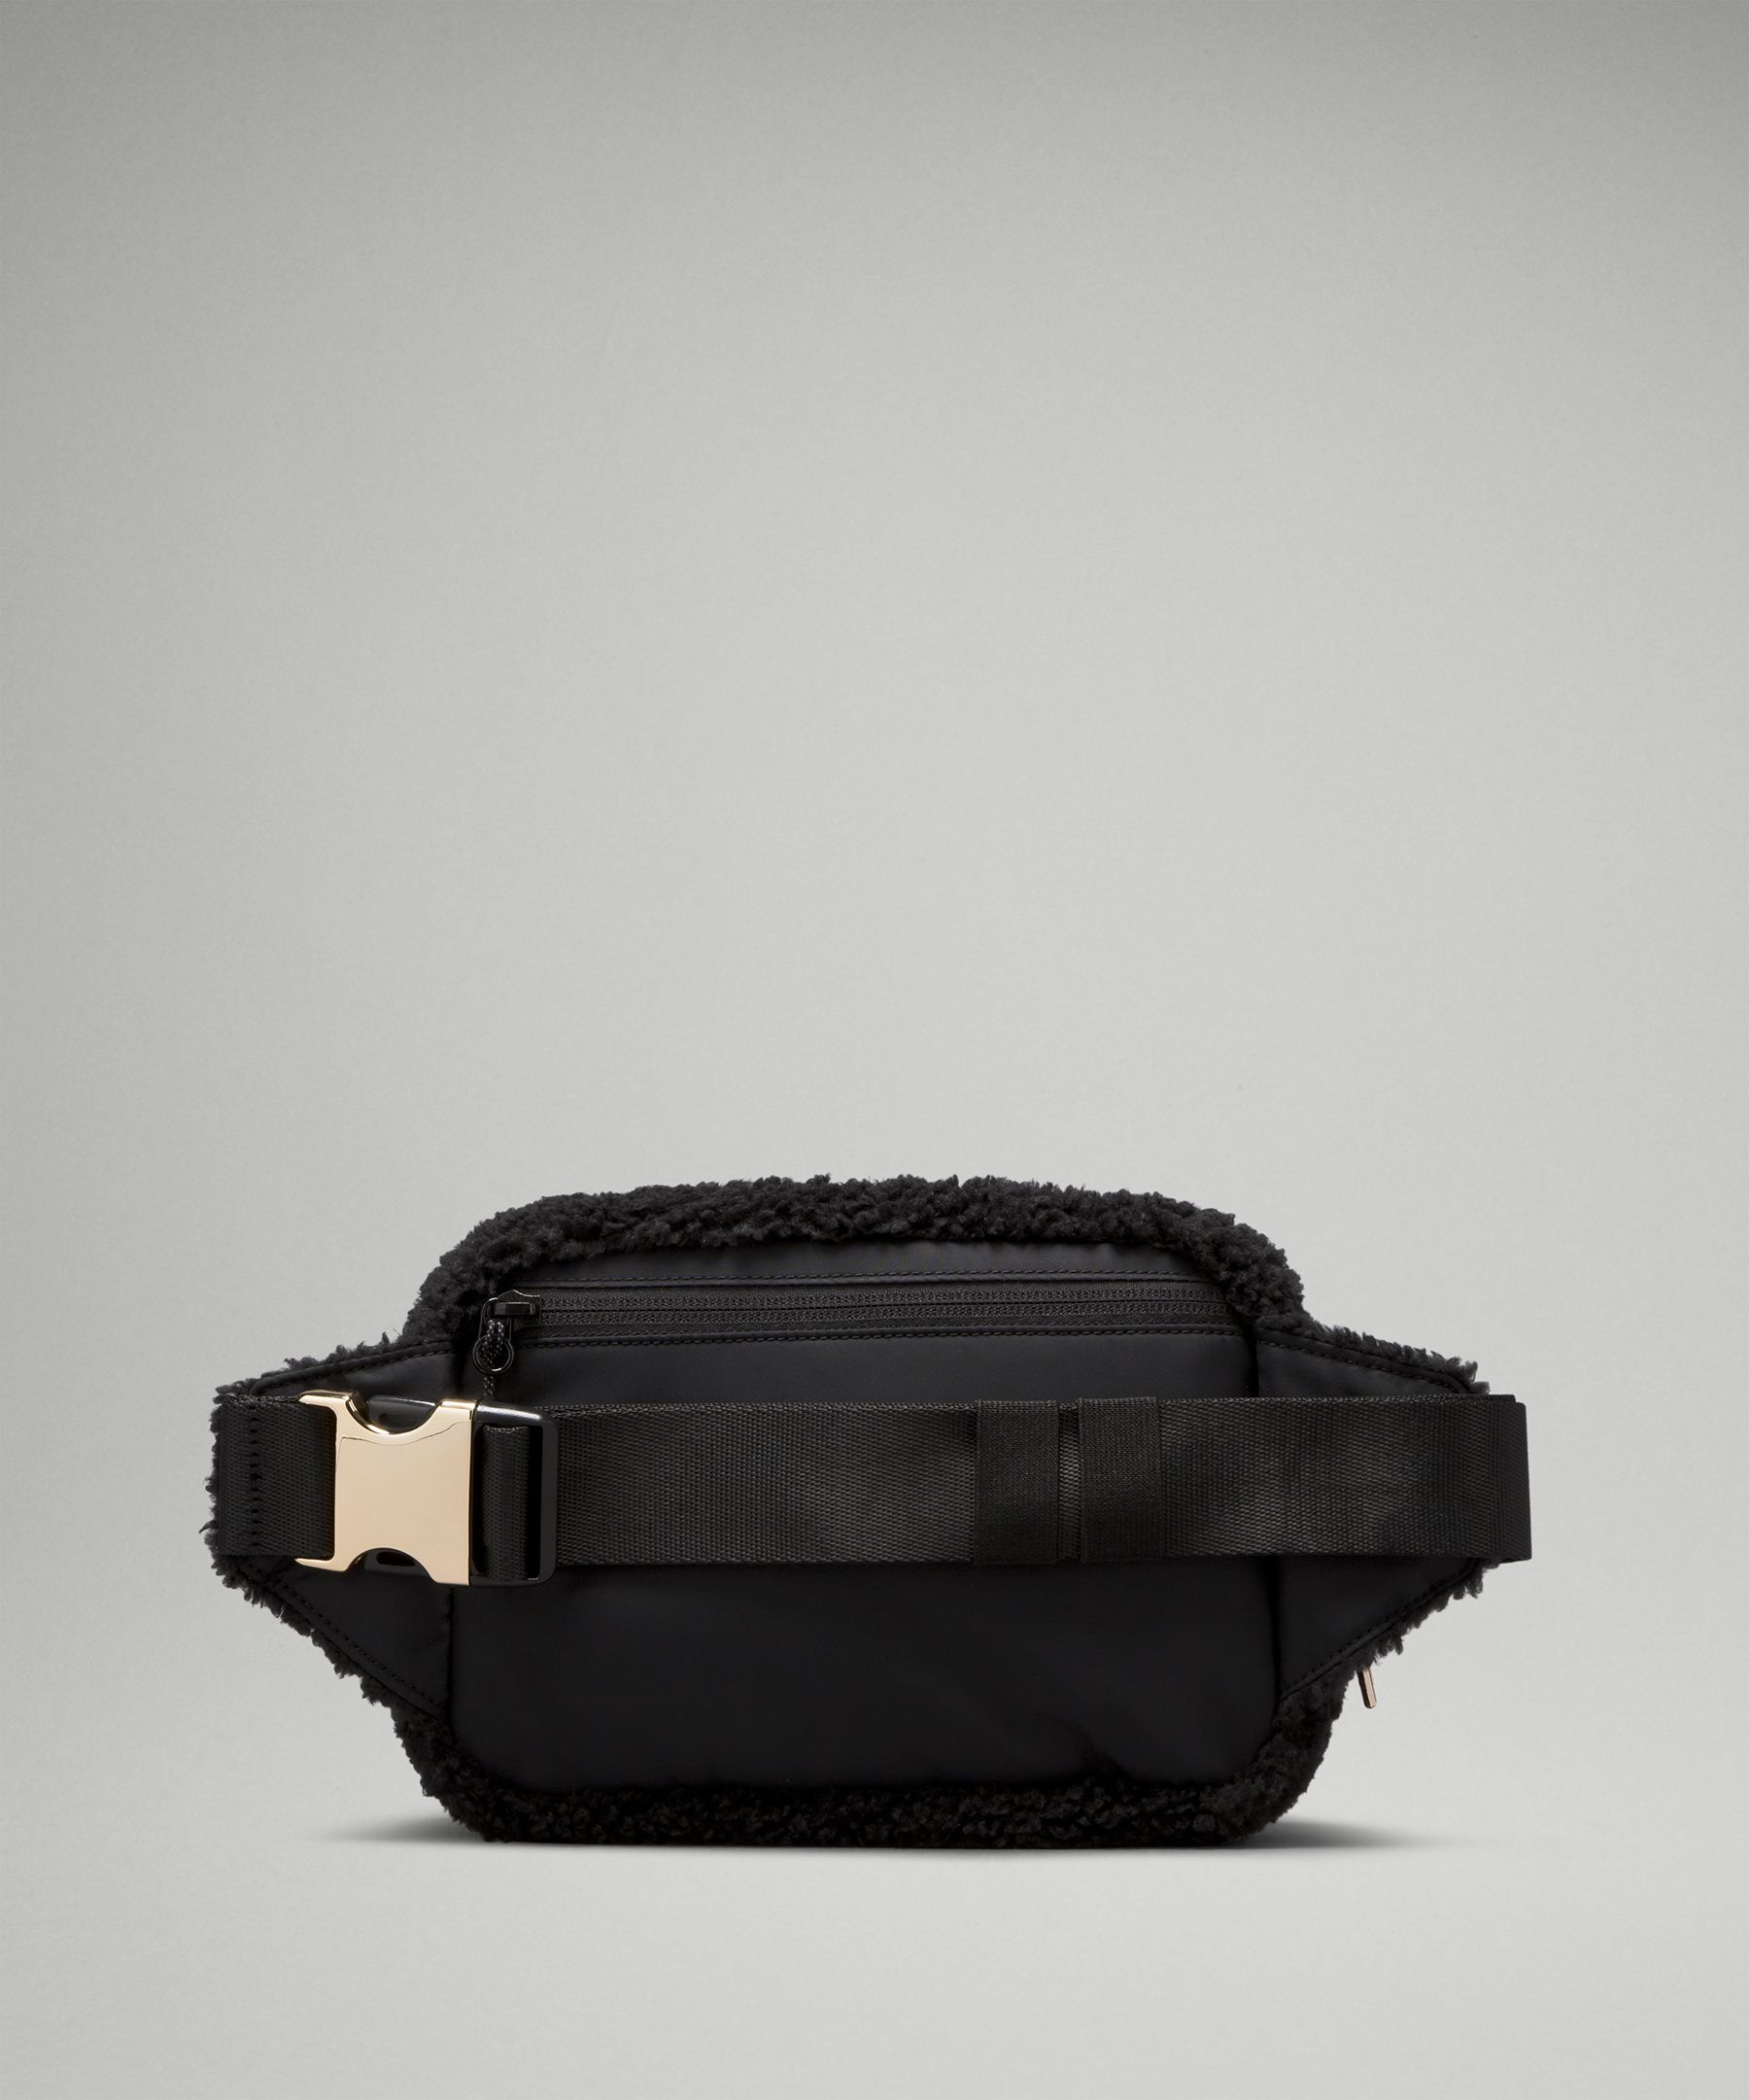 The Everywhere Belt Bag 2L is under $30 at lululemon for Black